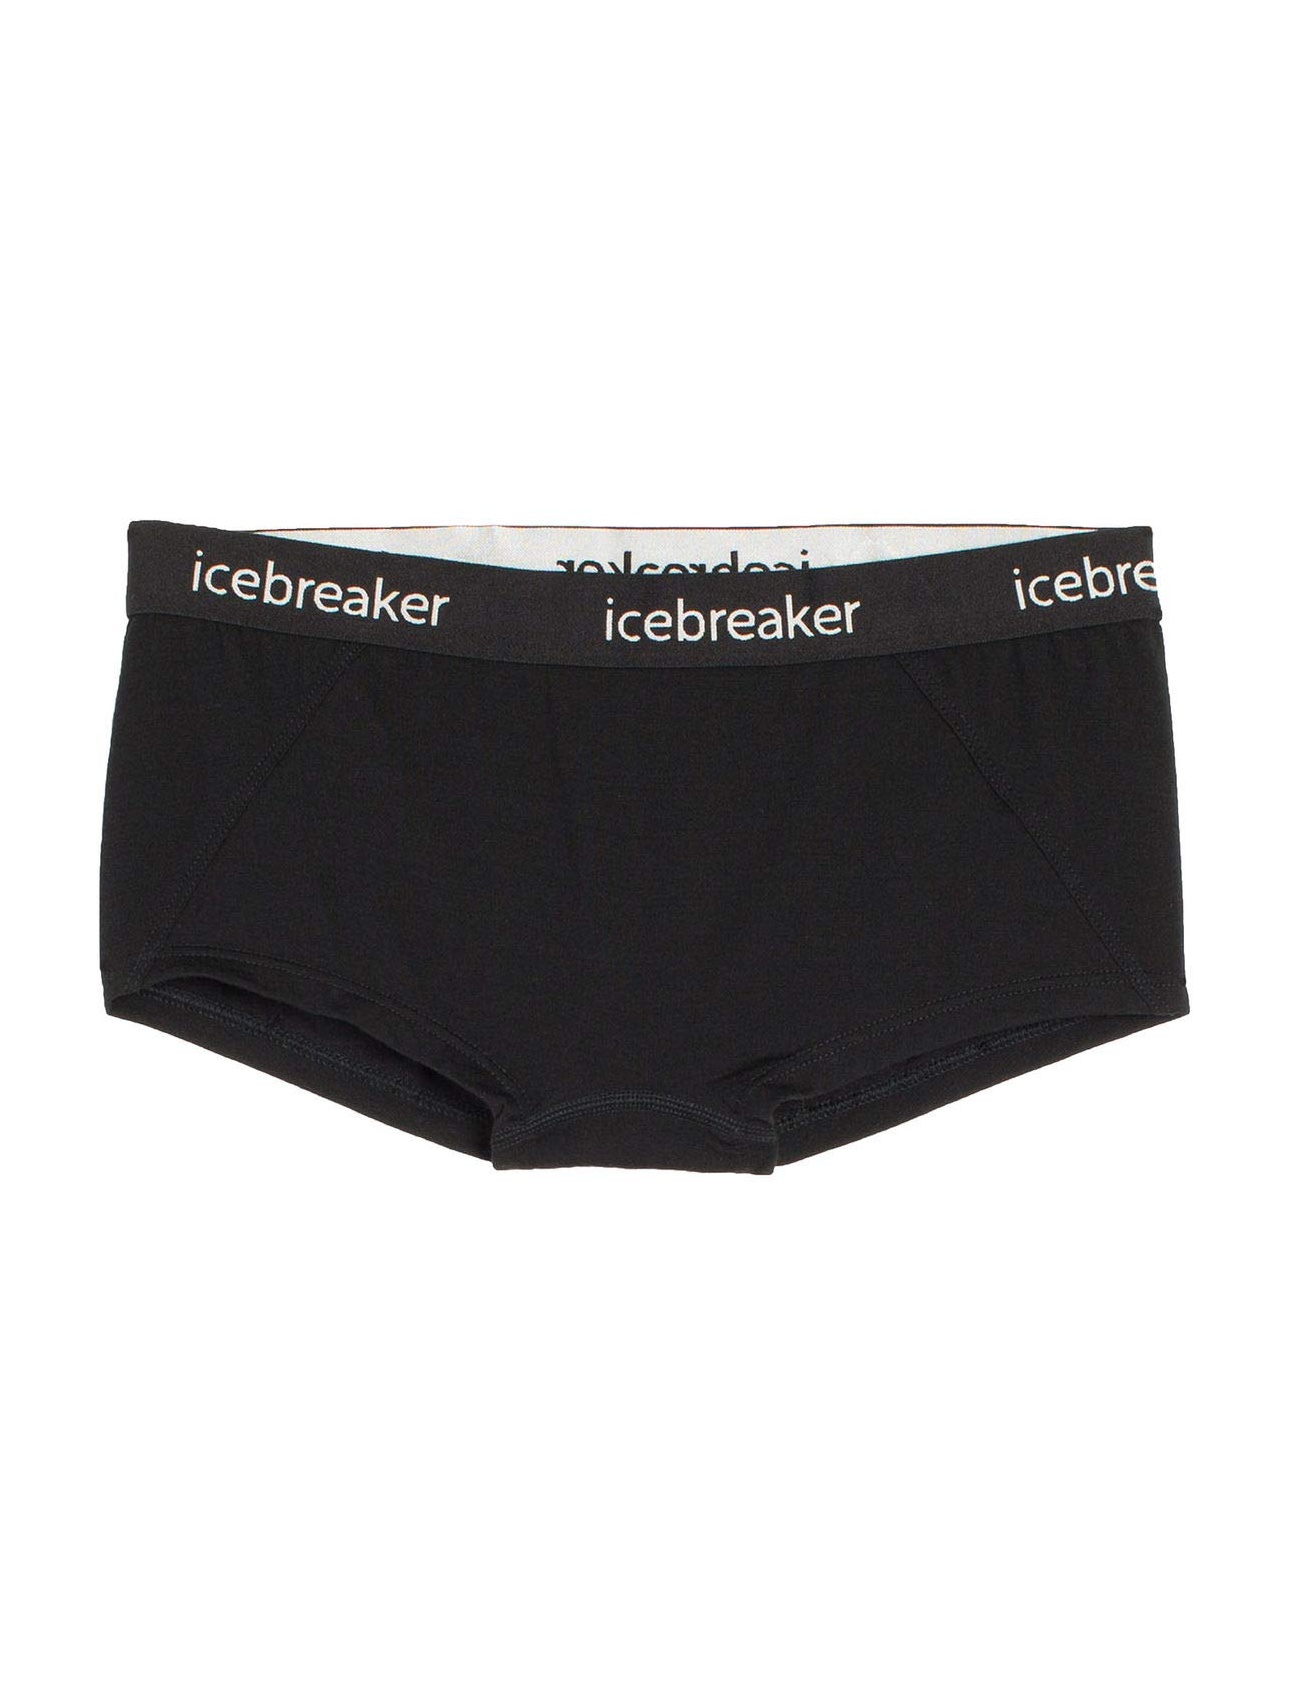 icebreaker sprite hot pants